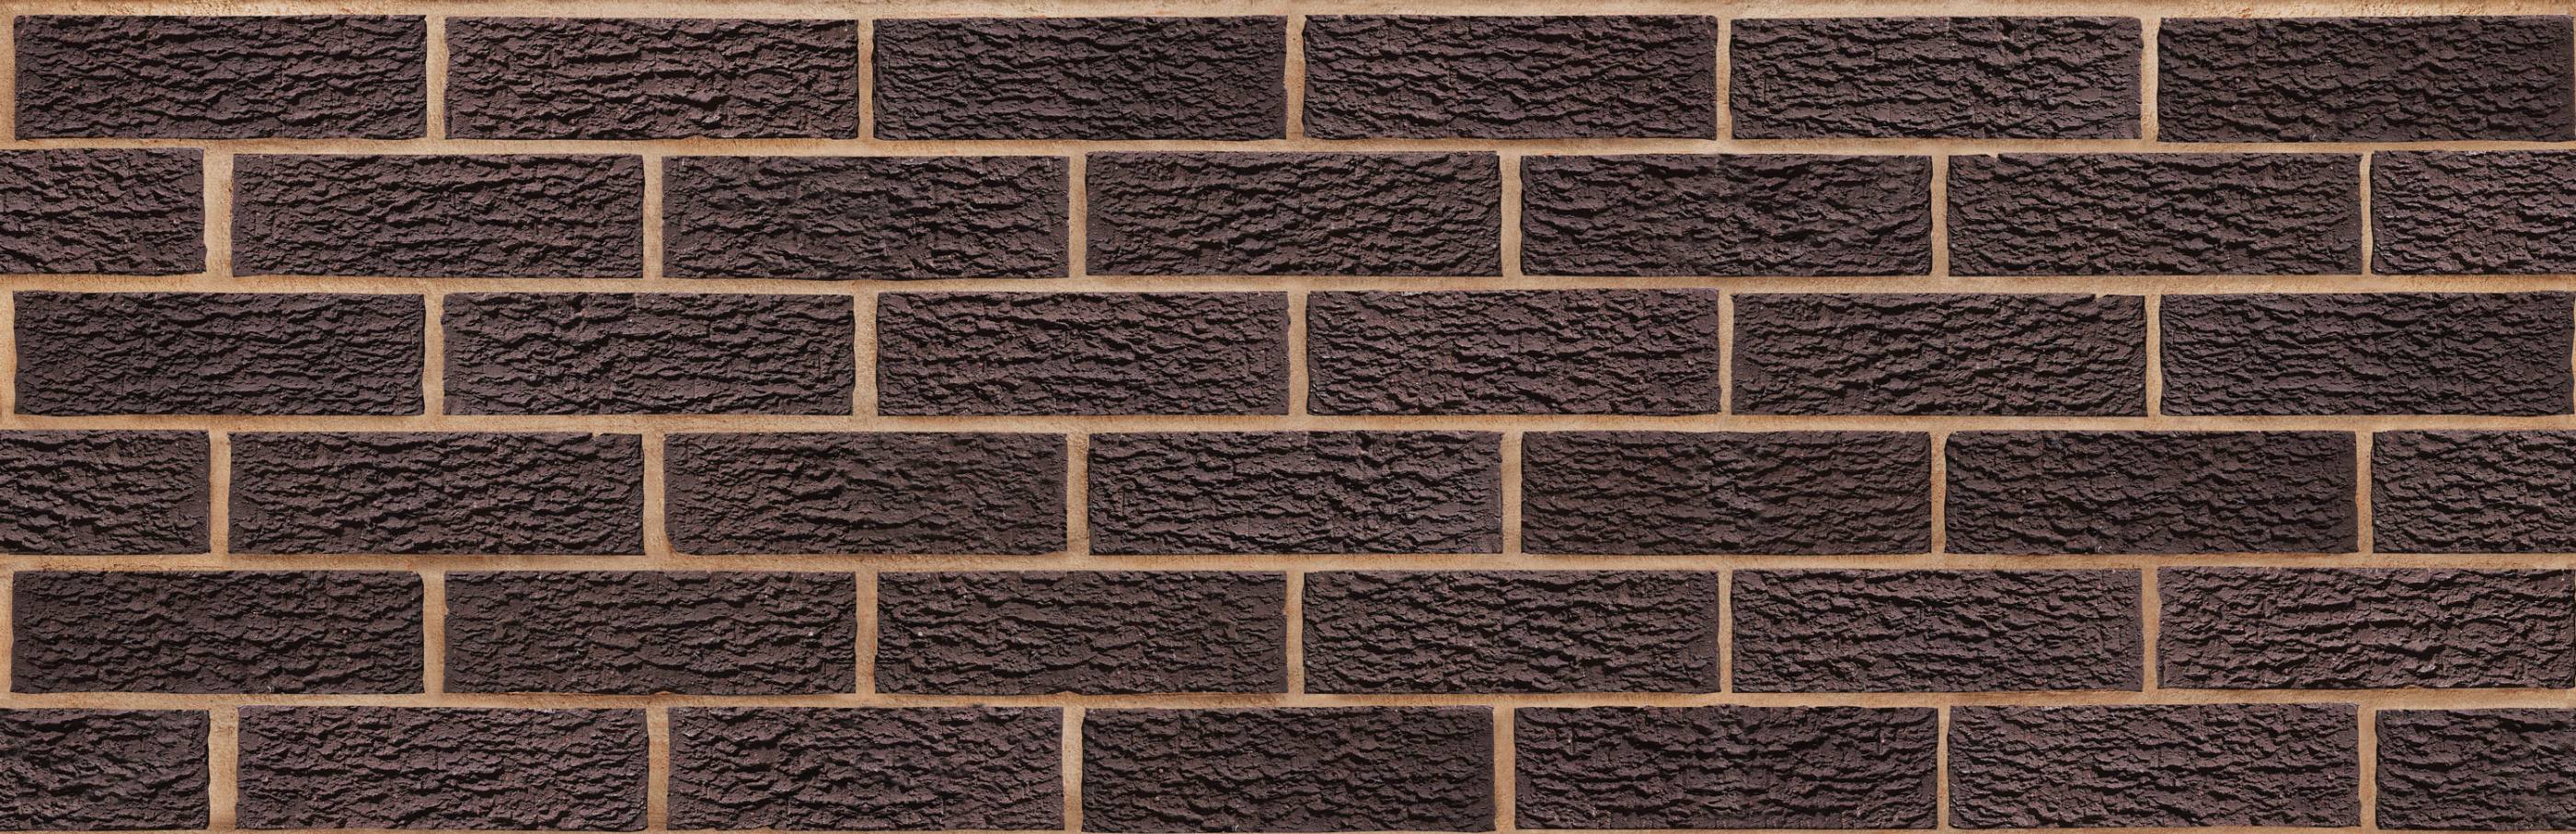 Carlton Brown Rustic Clay Brick